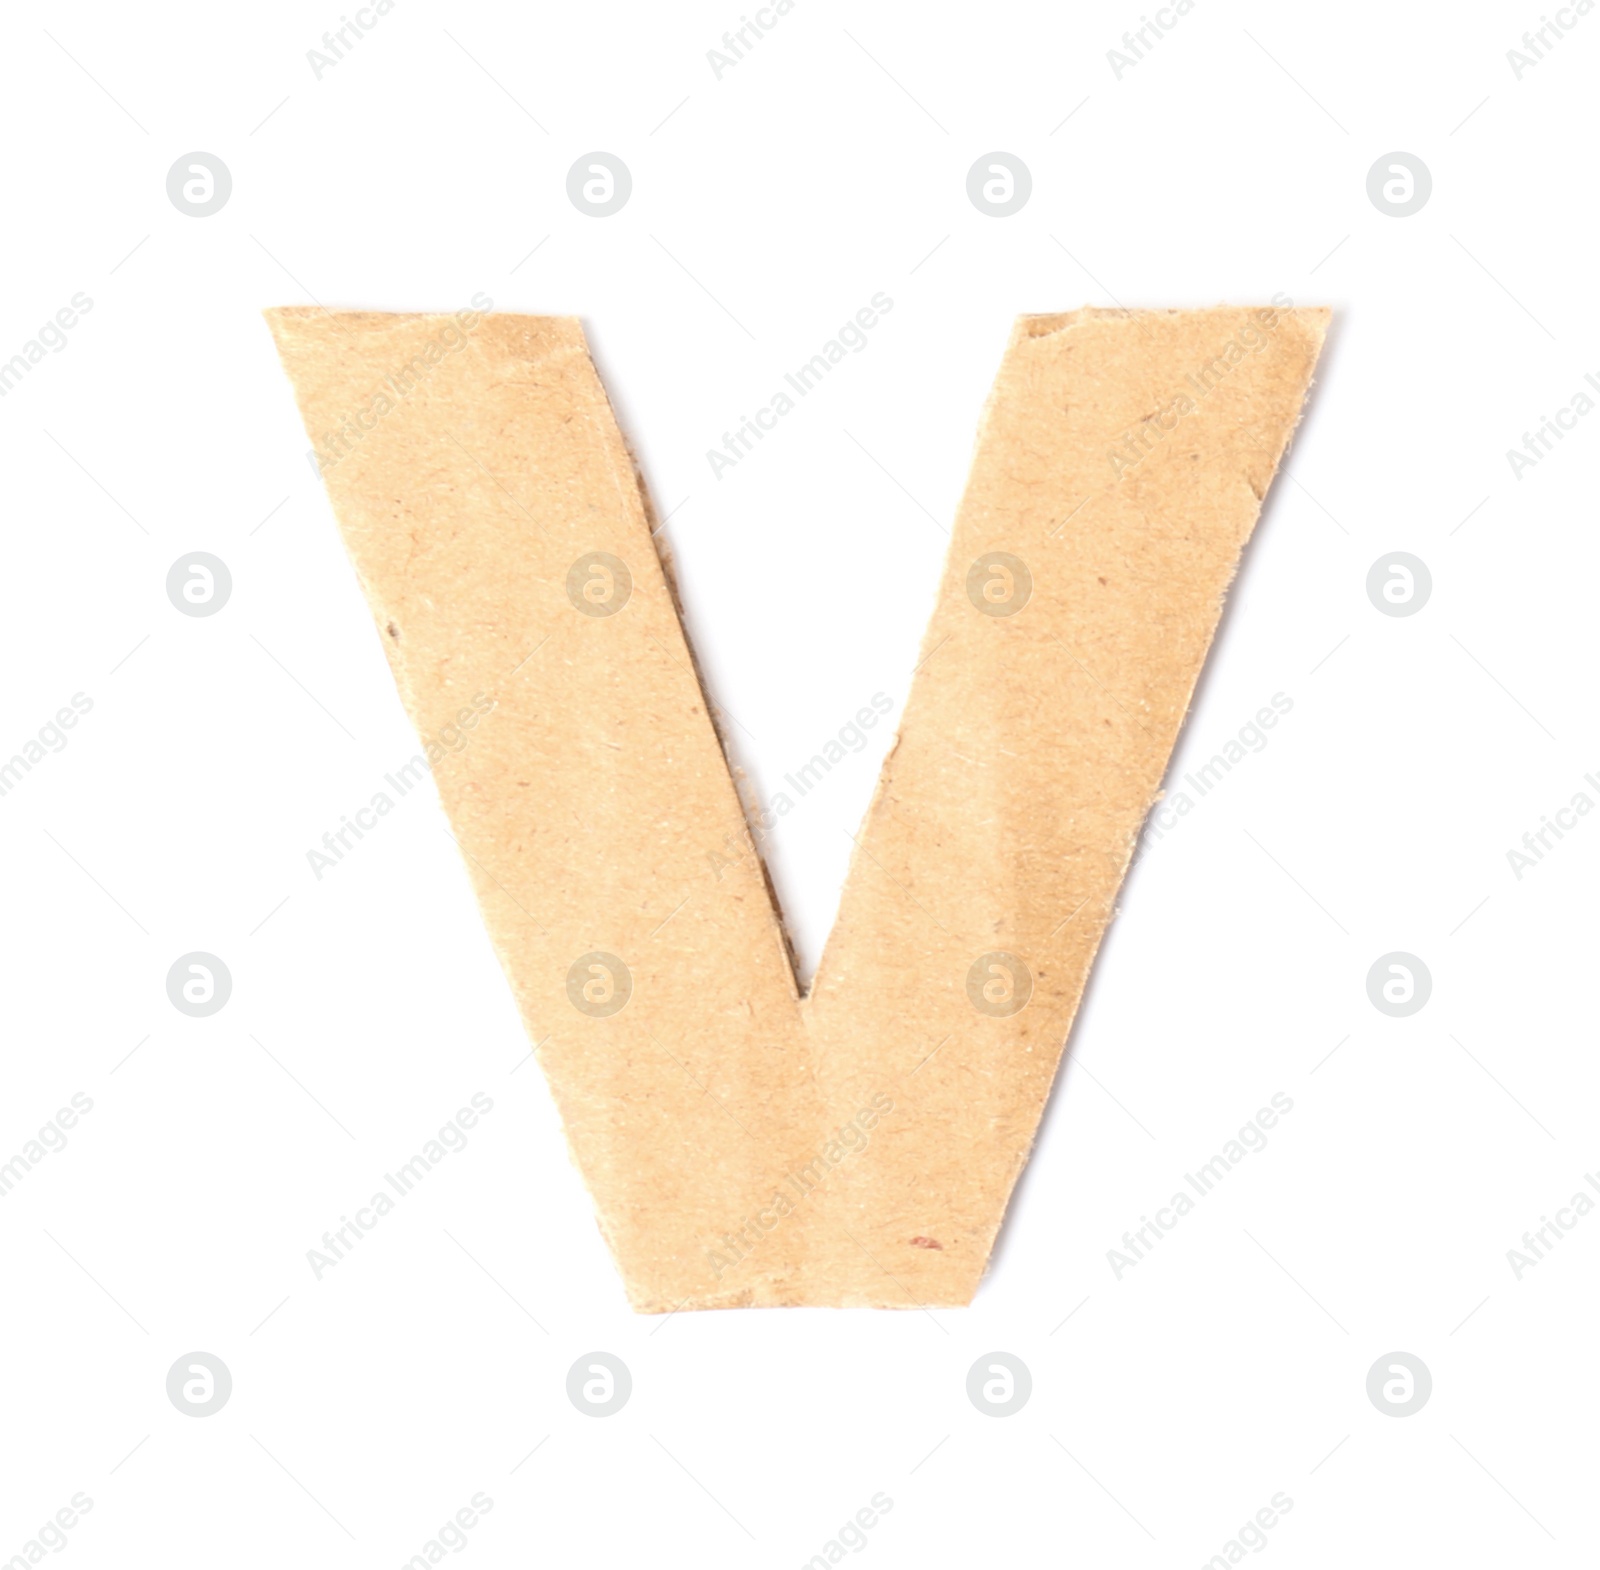 Photo of Letter V madecardboard on white background